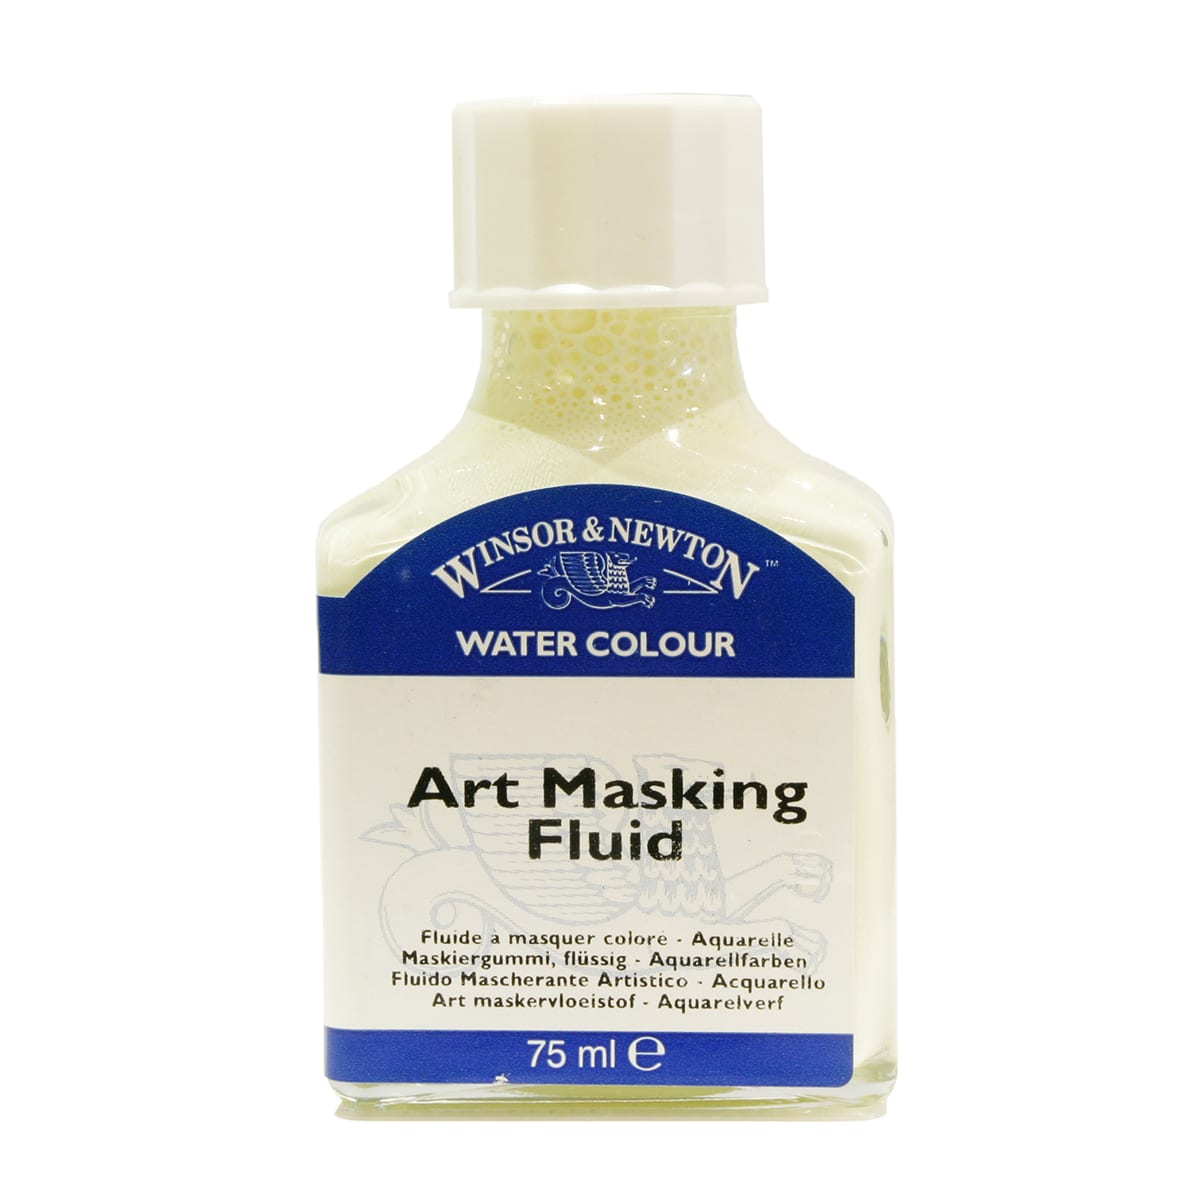 Winsor & Newton Art Masking Fluid